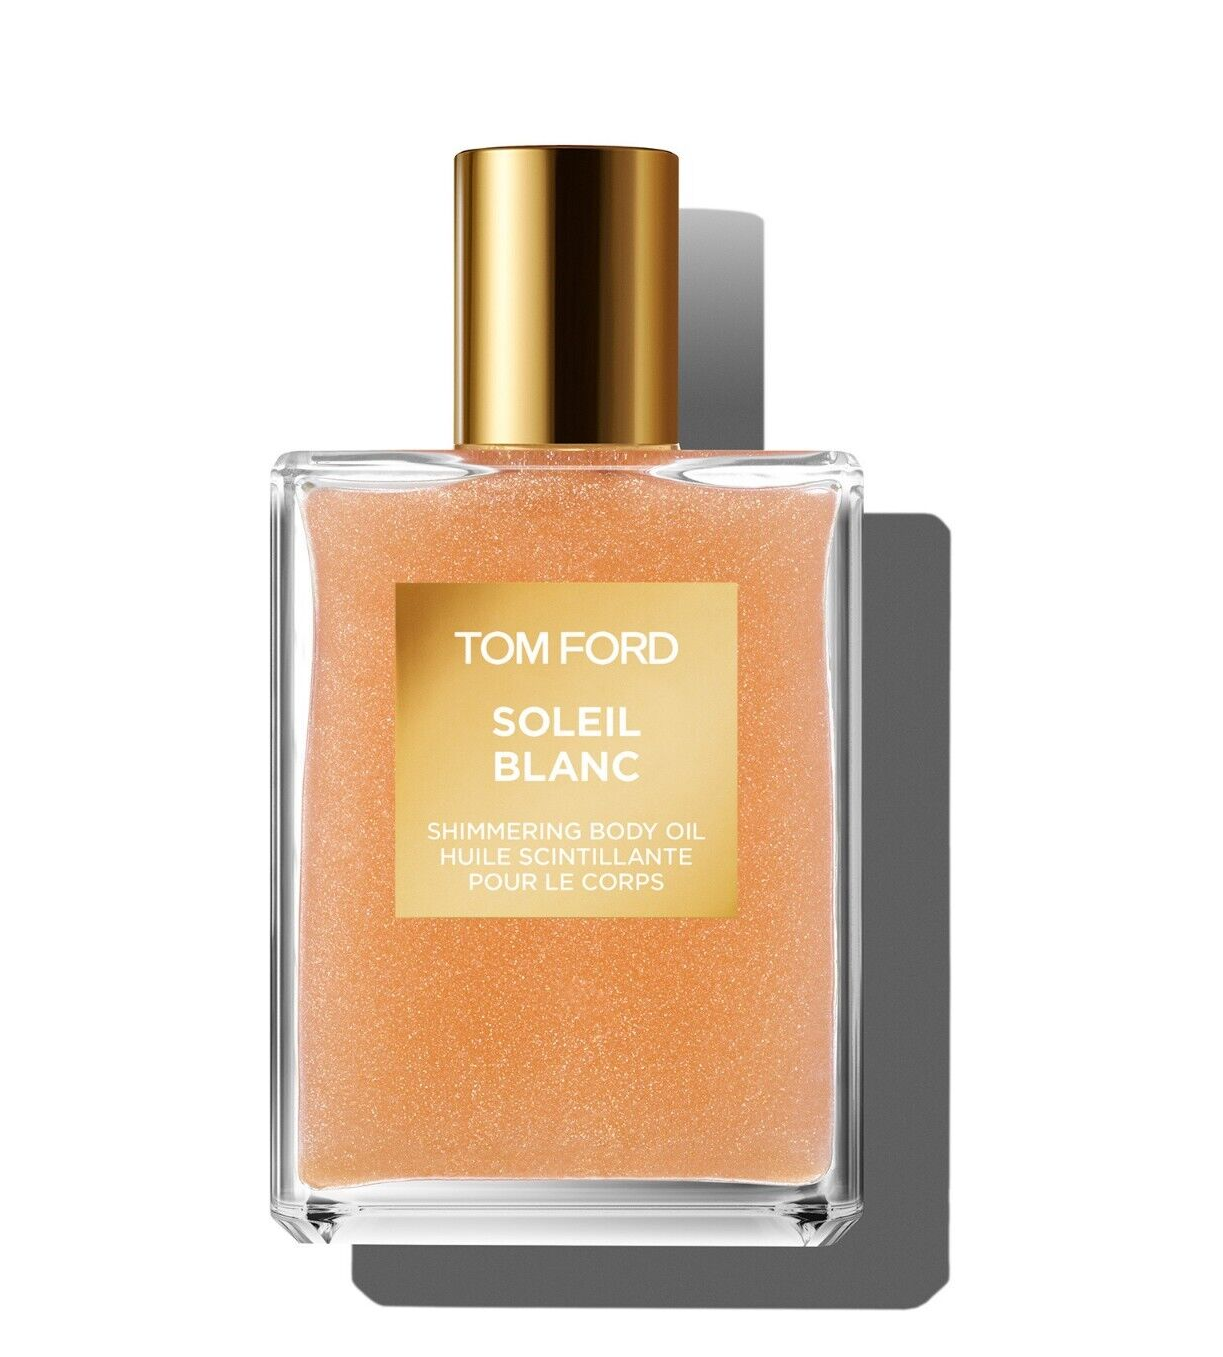 TOM FORD Soleil Blanc ROSE GOLD Shimmering Body Oil Perfume Spray 3.4oz 100m NIB - $96.50